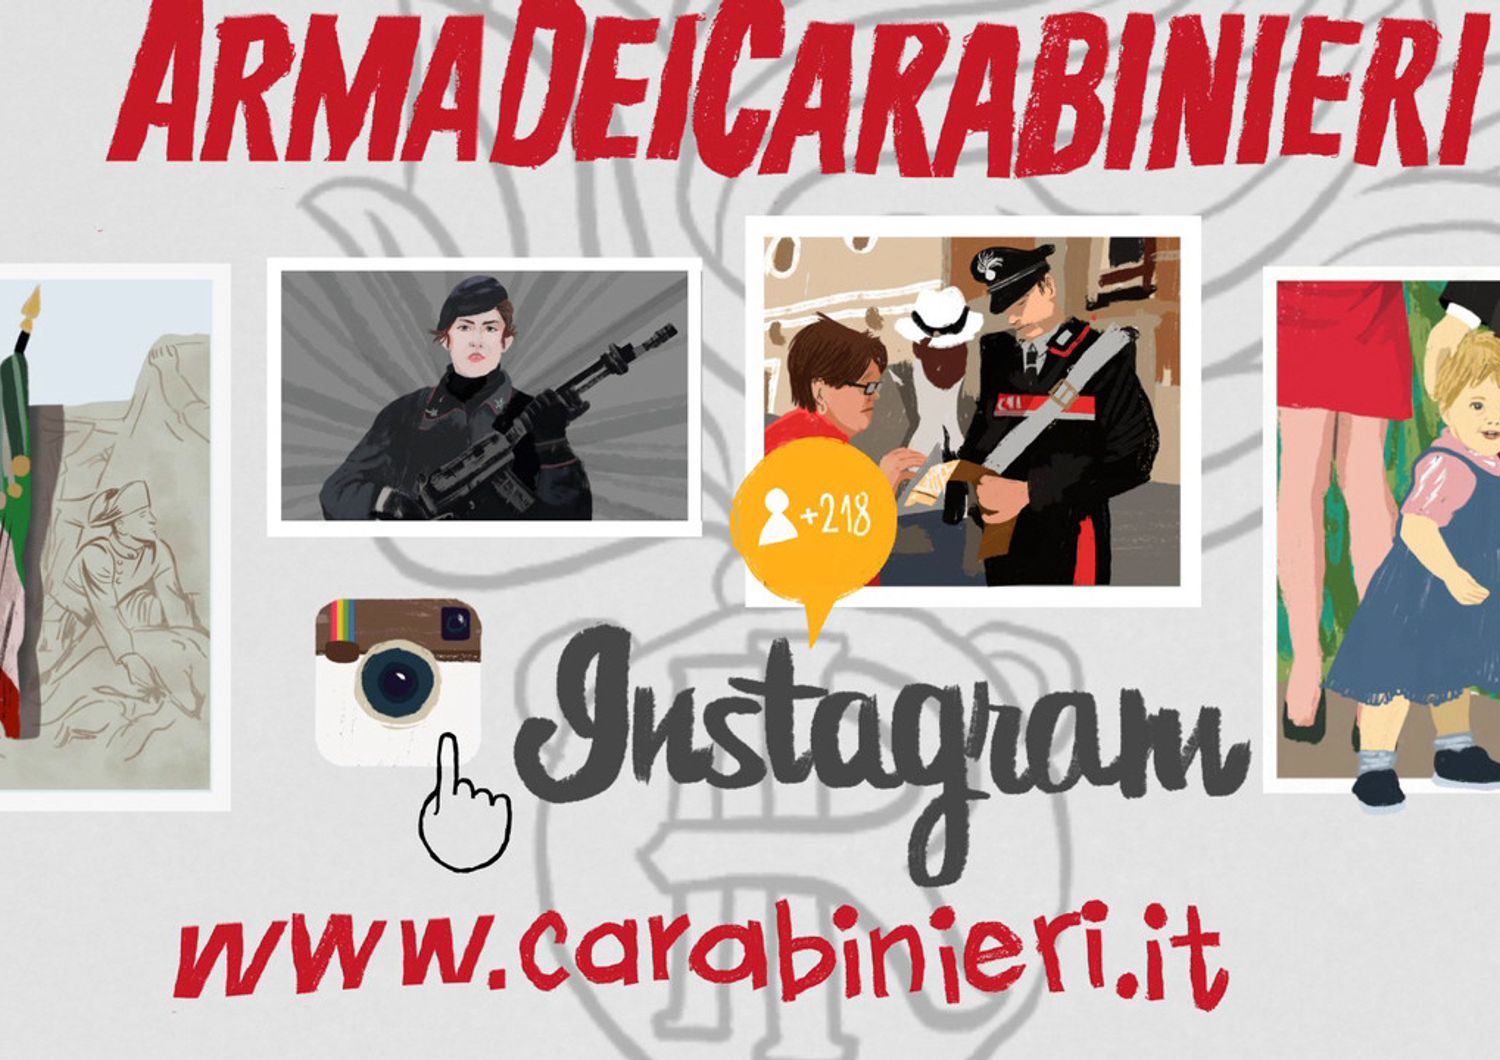 Carabinieri Instagram